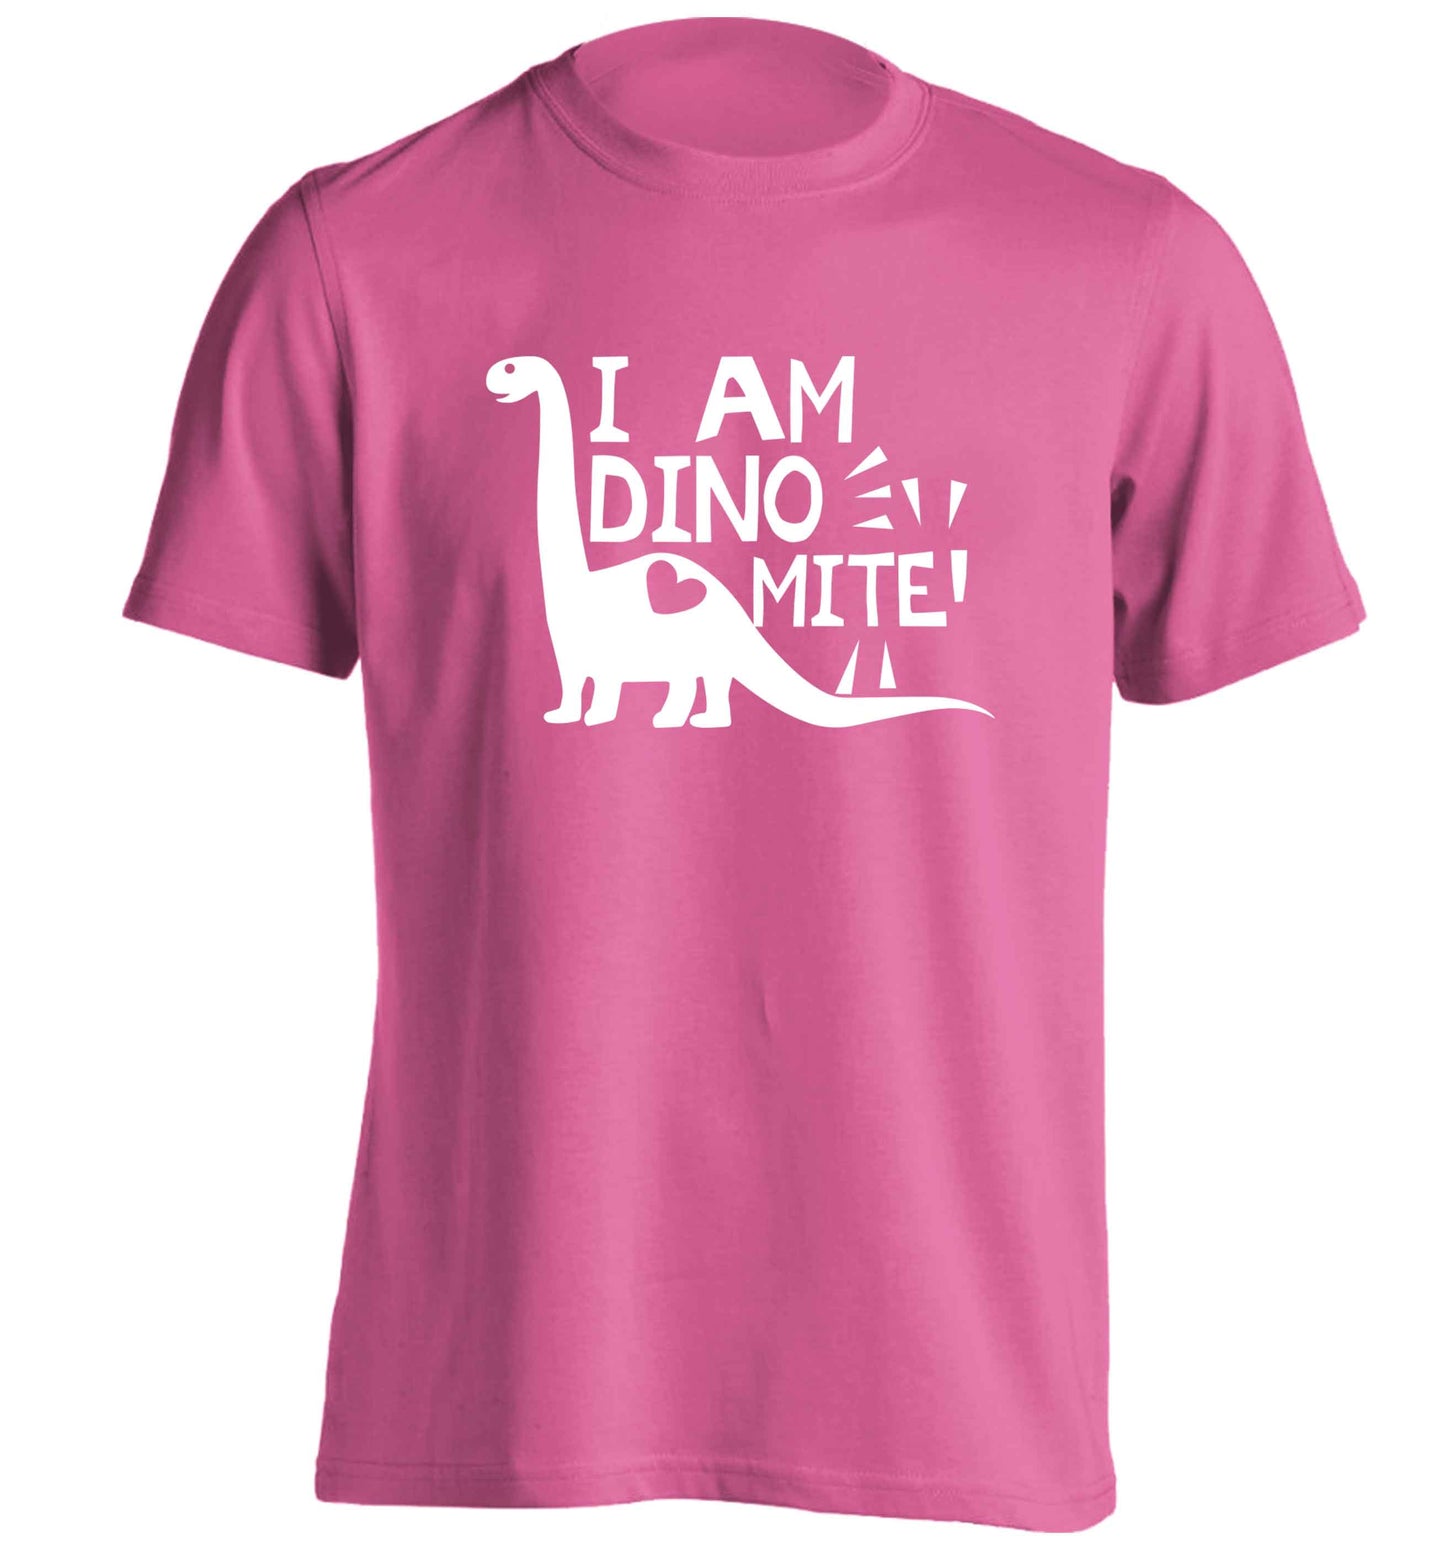 I am dinomite! adults unisex pink Tshirt 2XL